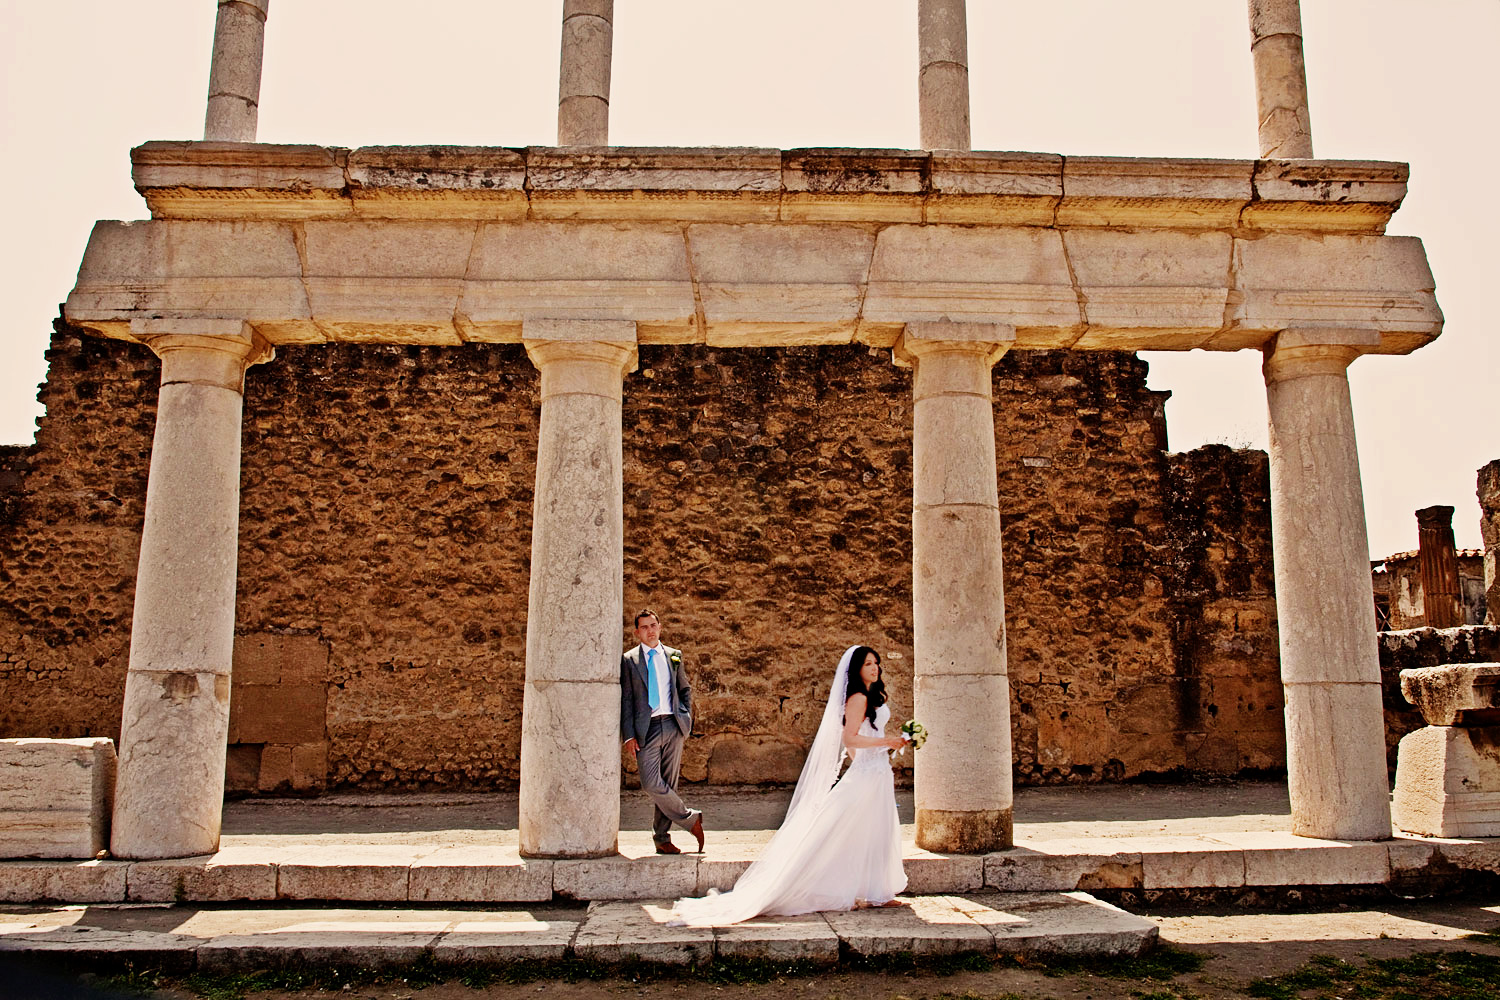 02_wedding-pompeii-photo.jpg